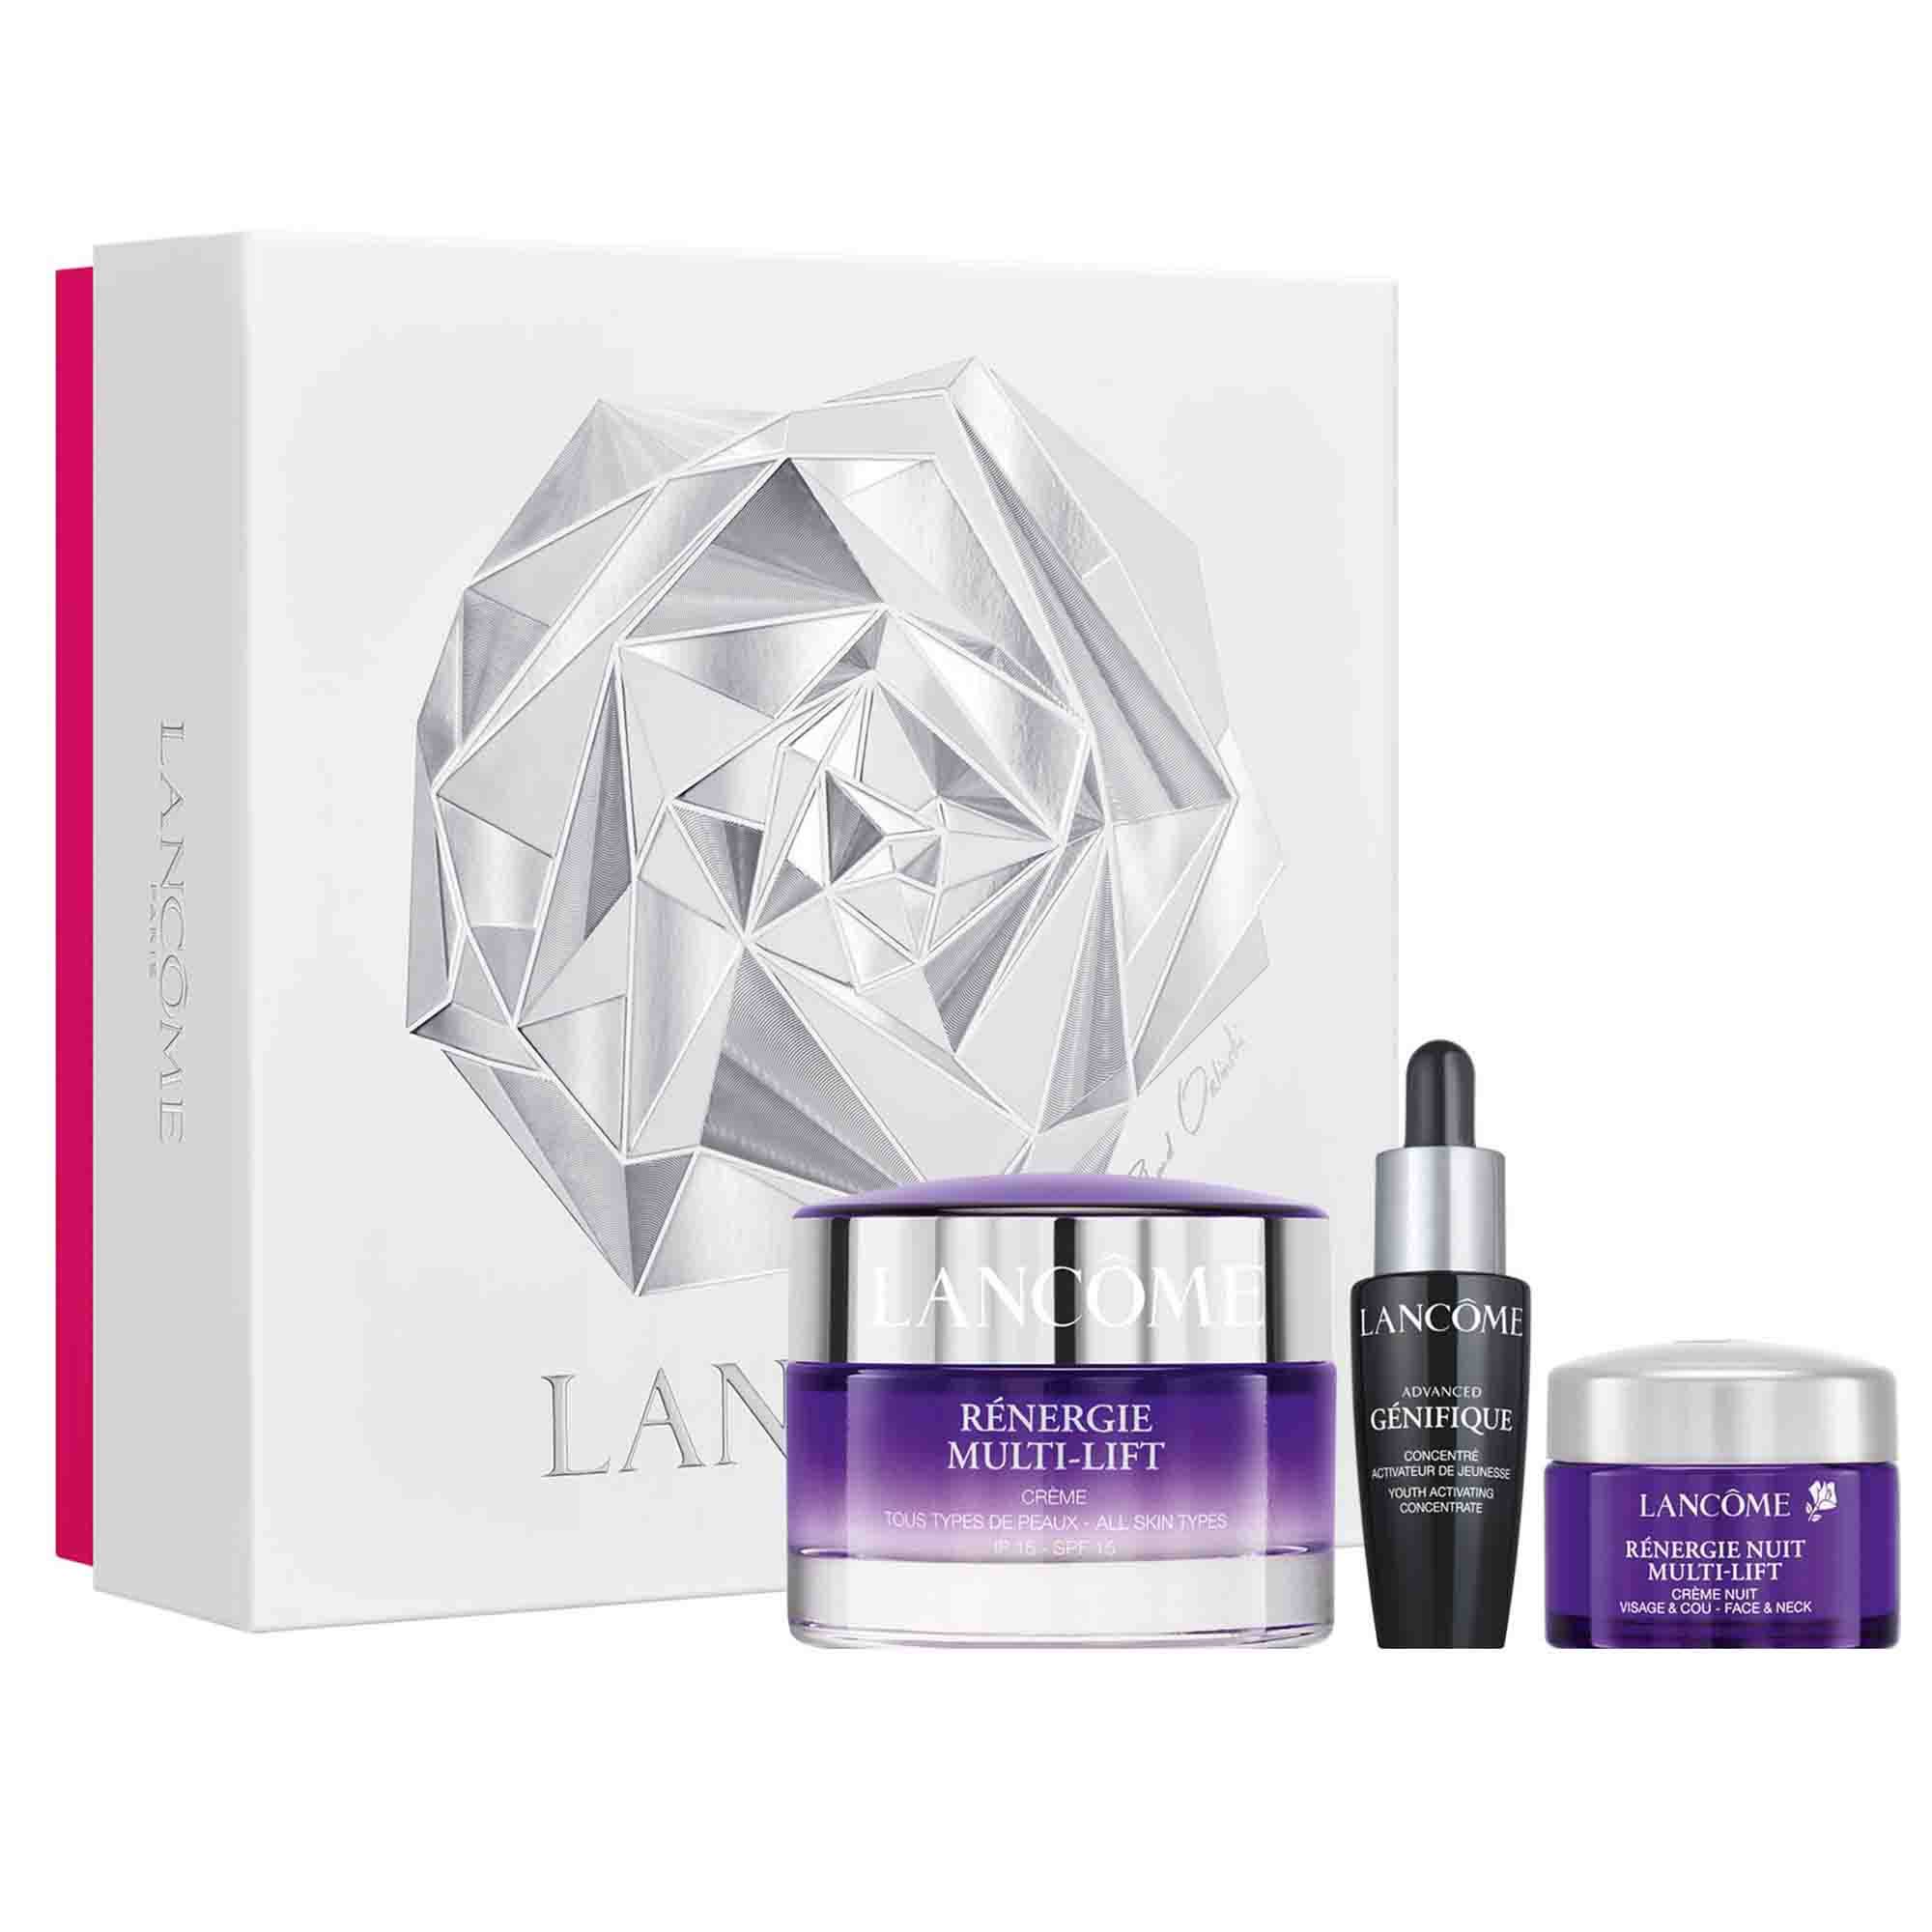 Lancôme Rénergie Multi-Lift 50ML Holiday Skincare Gift Set for Her